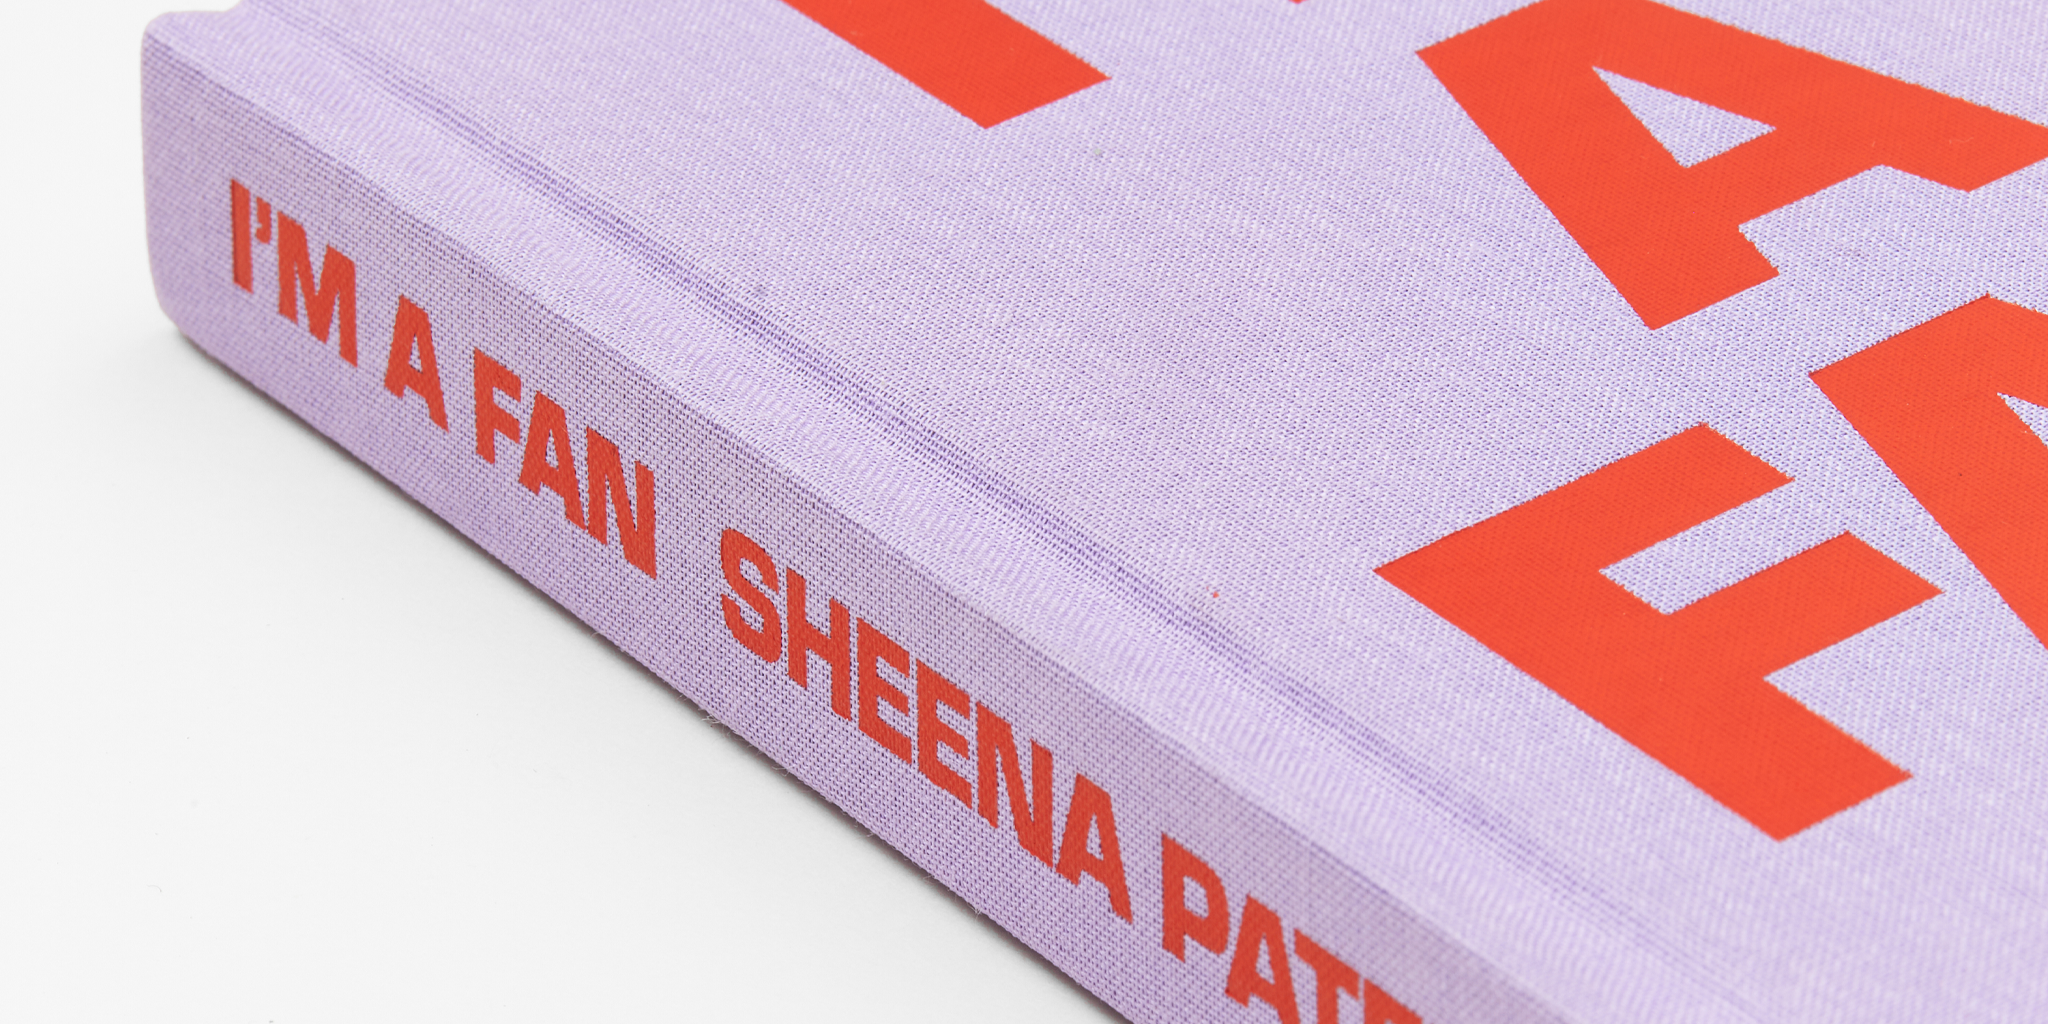 I'M A FAN (SIGNED COPIES) - Sheena Patel